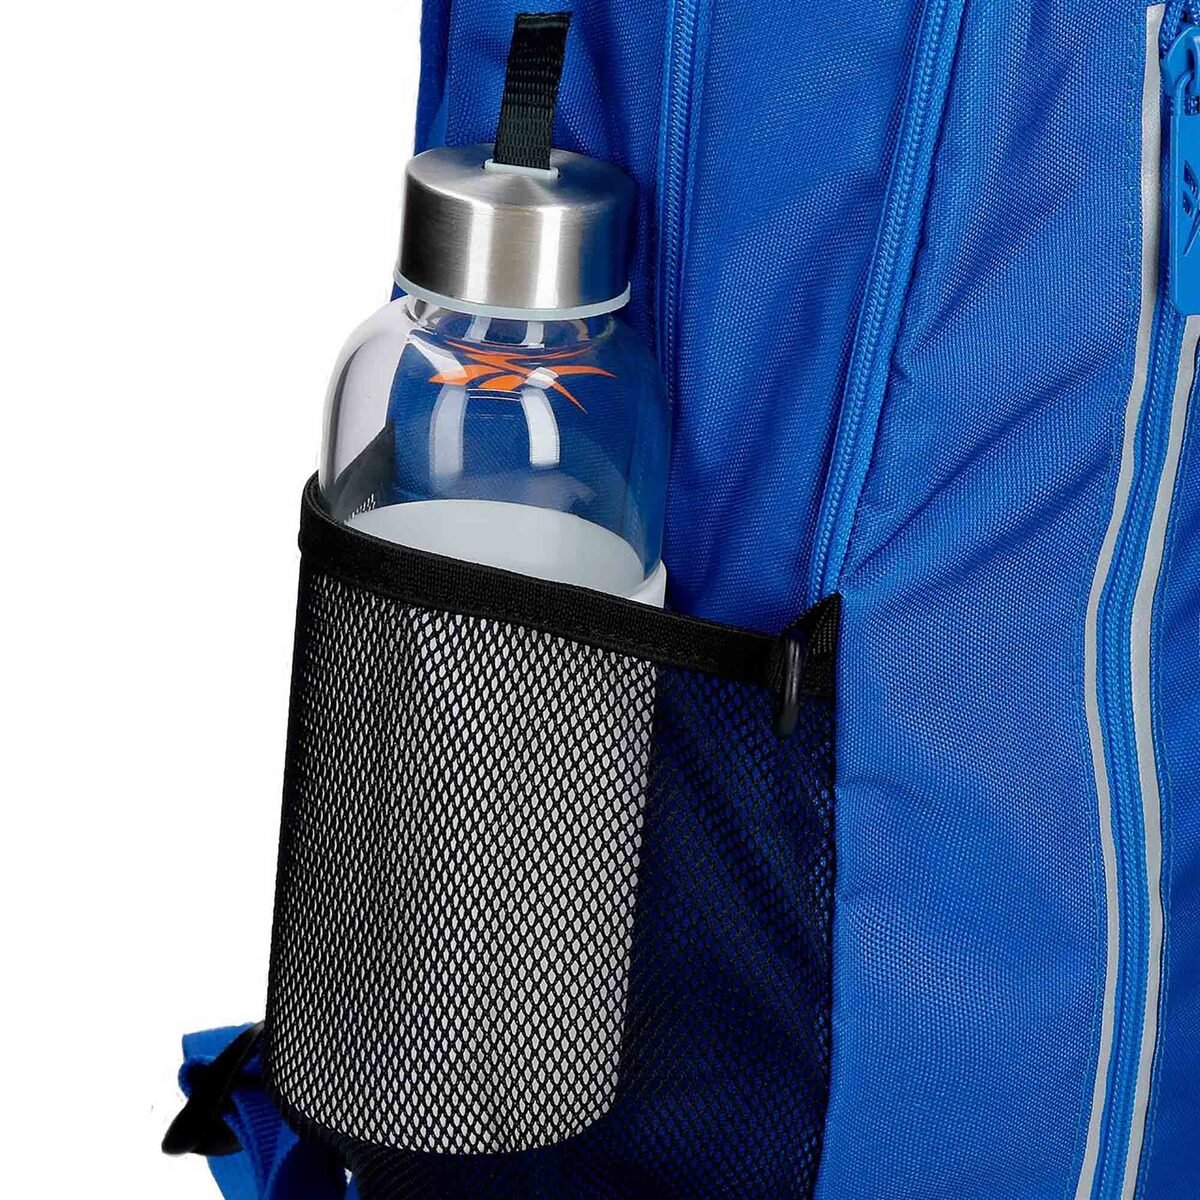 Reebok Backpack 46cm 8882322 Blue